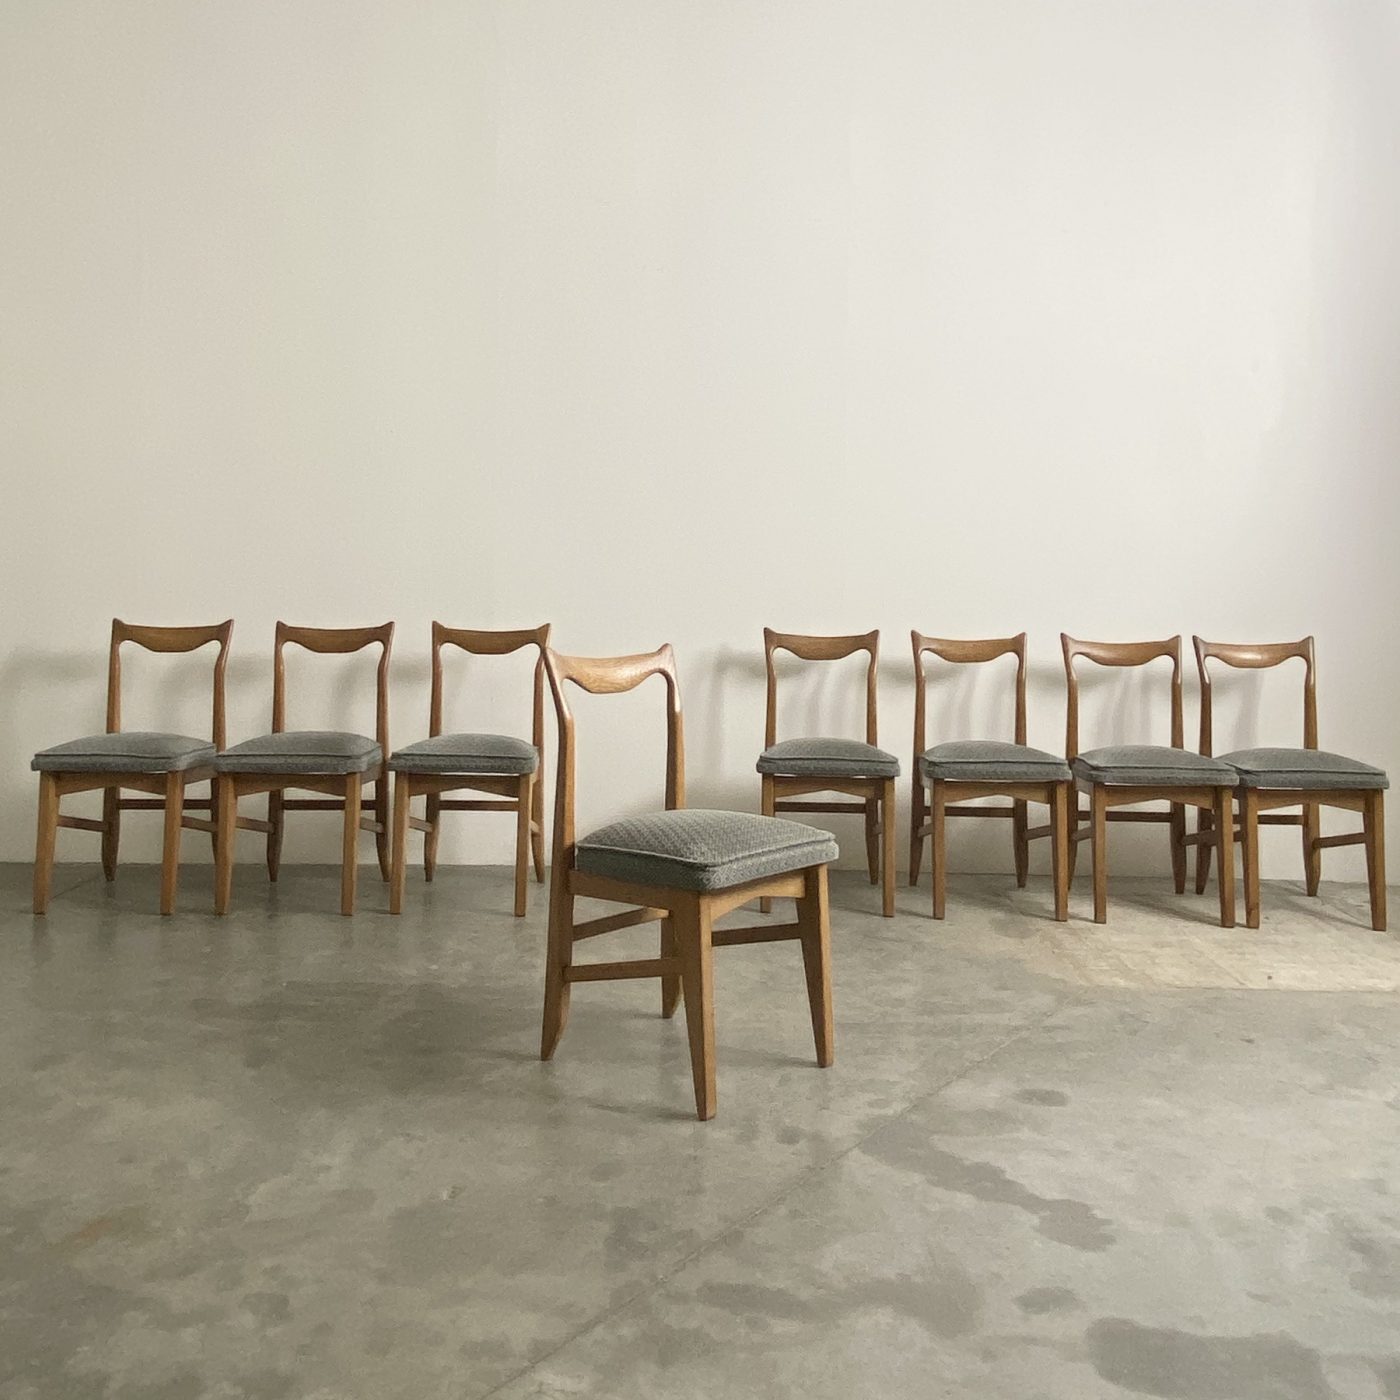 objet-vagabond-midcentury-chairs0002